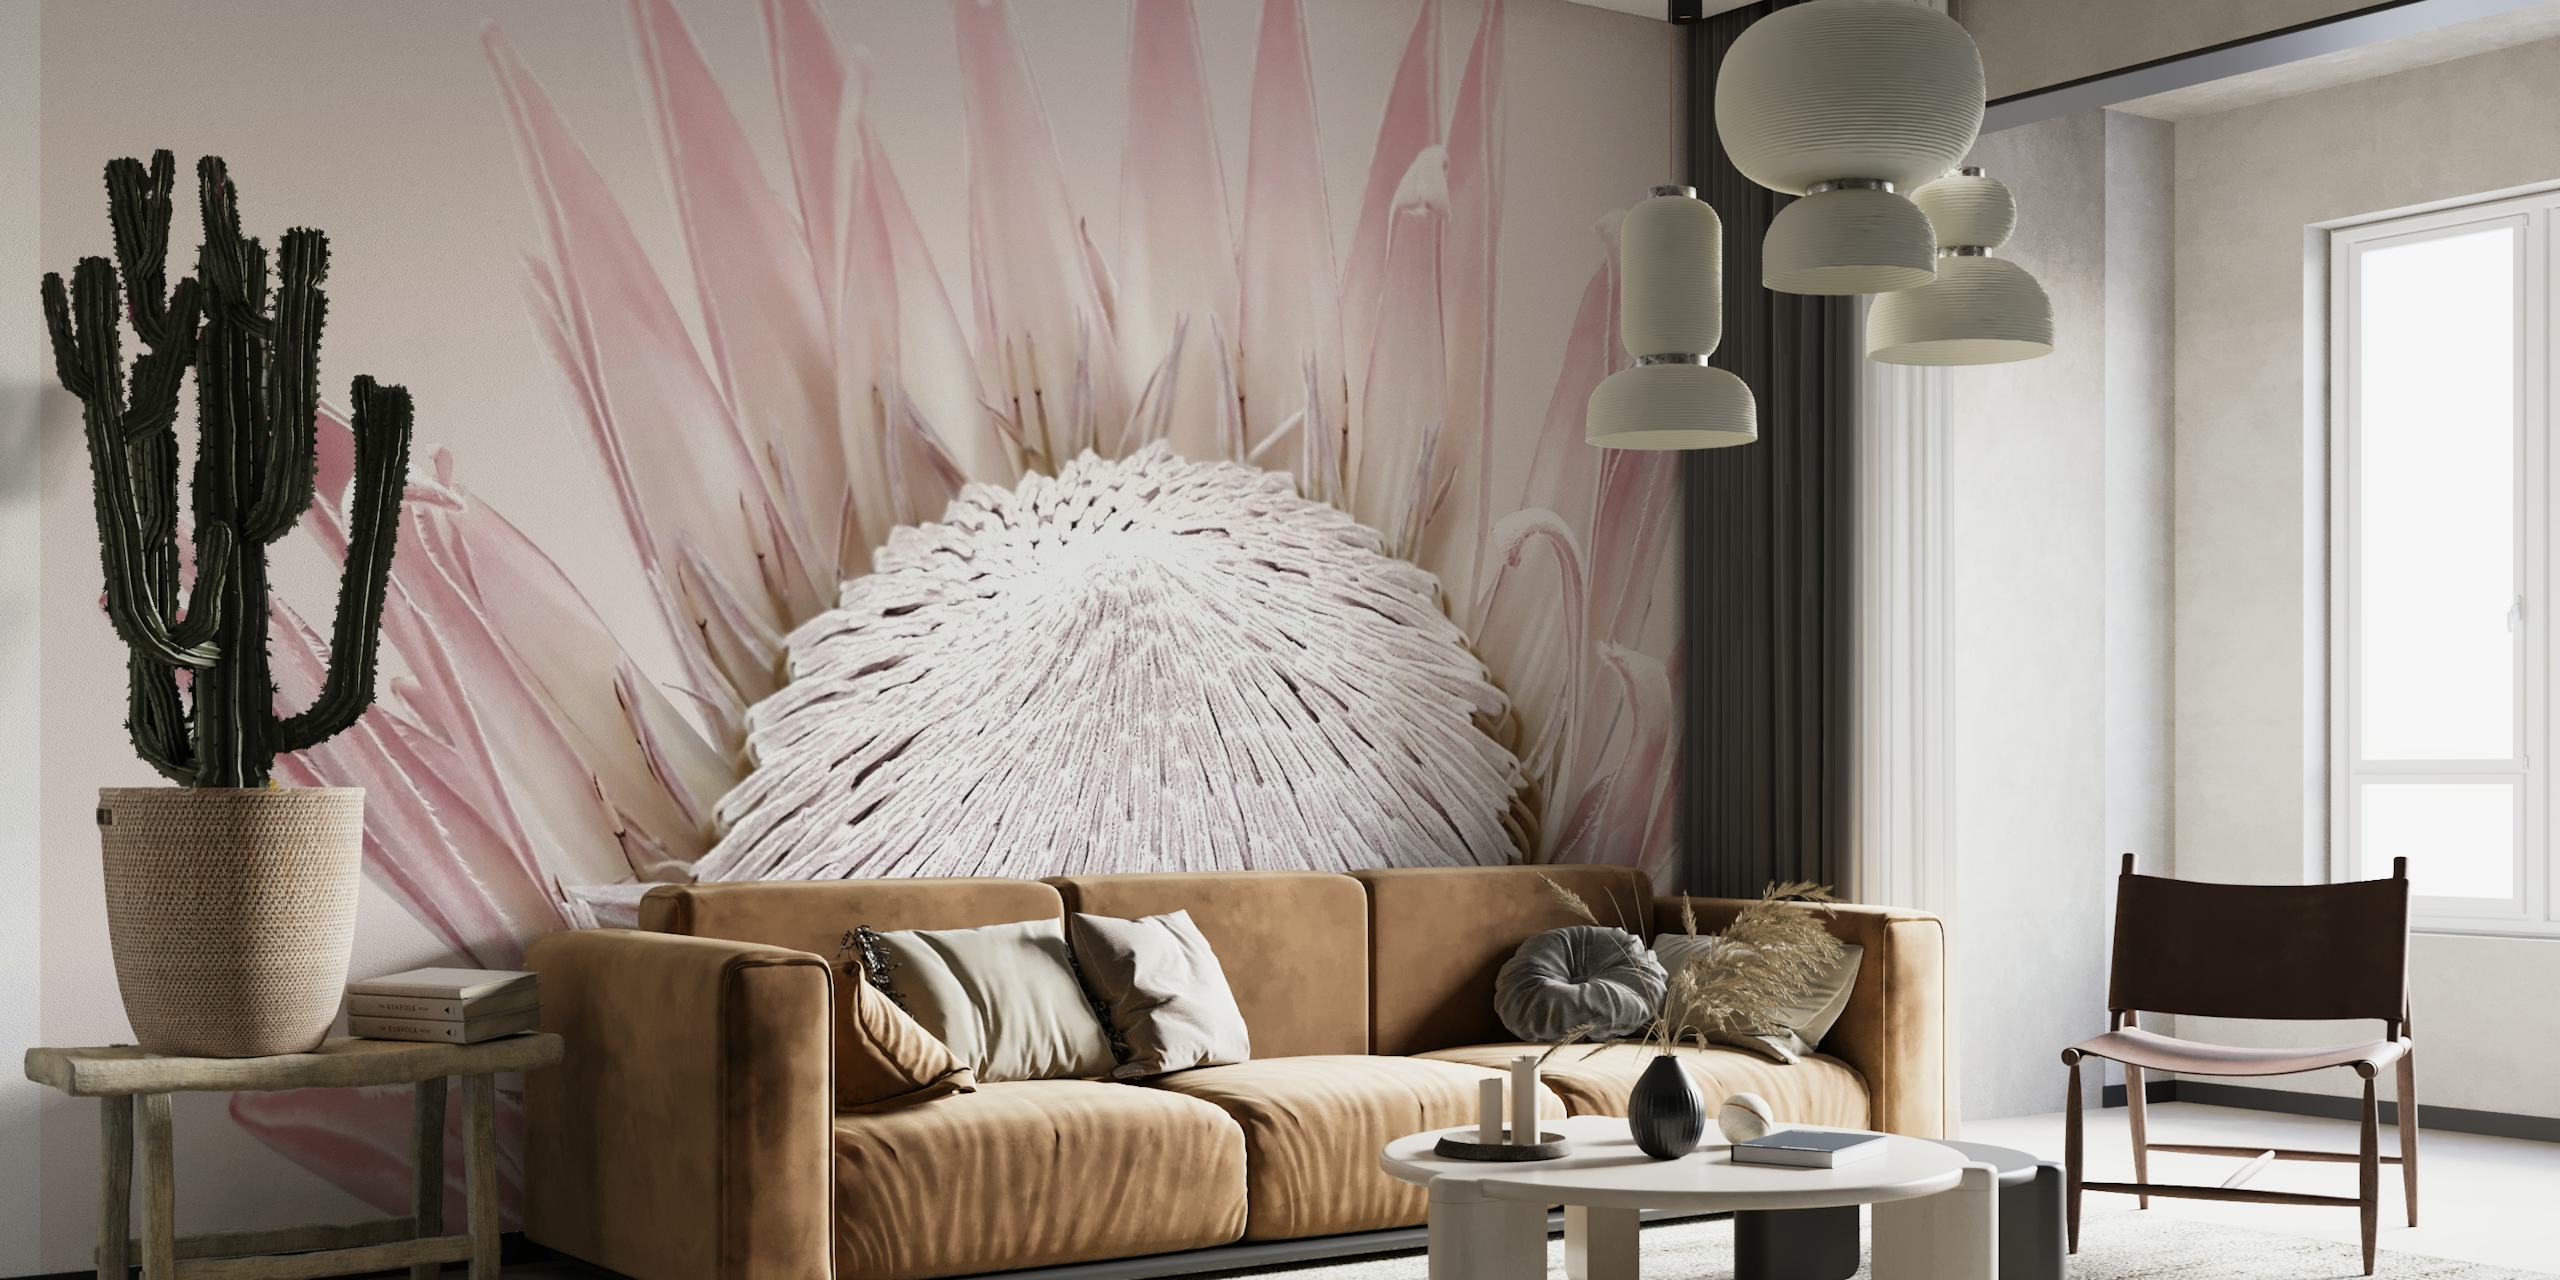 Pink King Protea Flower papel pintado